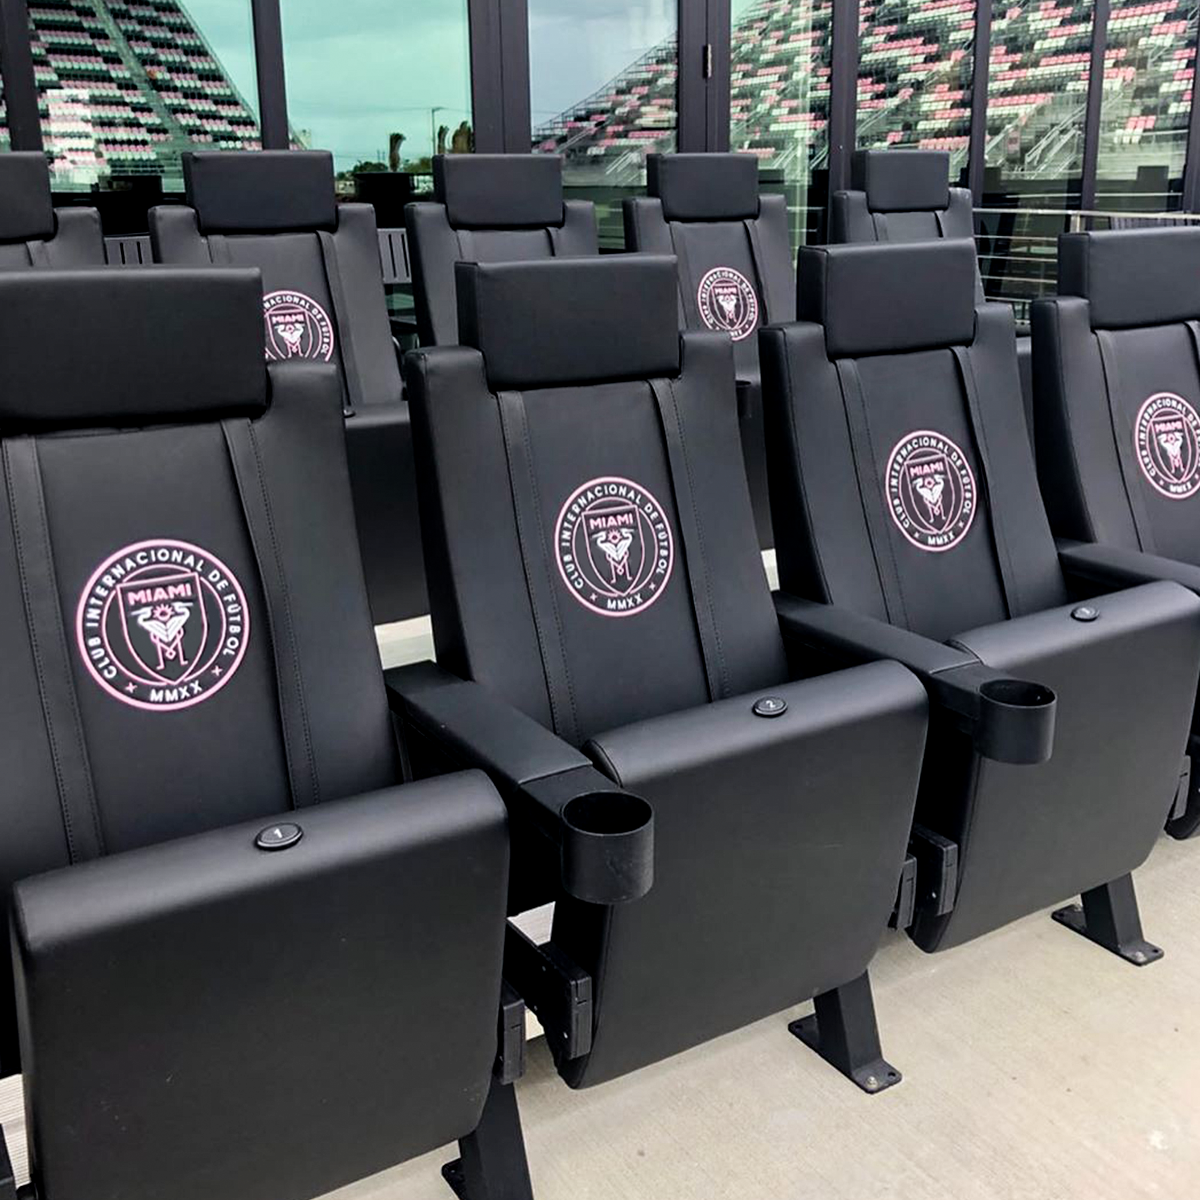 SuiteMax 3.5 VIP Seats with Nebraska Cornhuskers Secondary